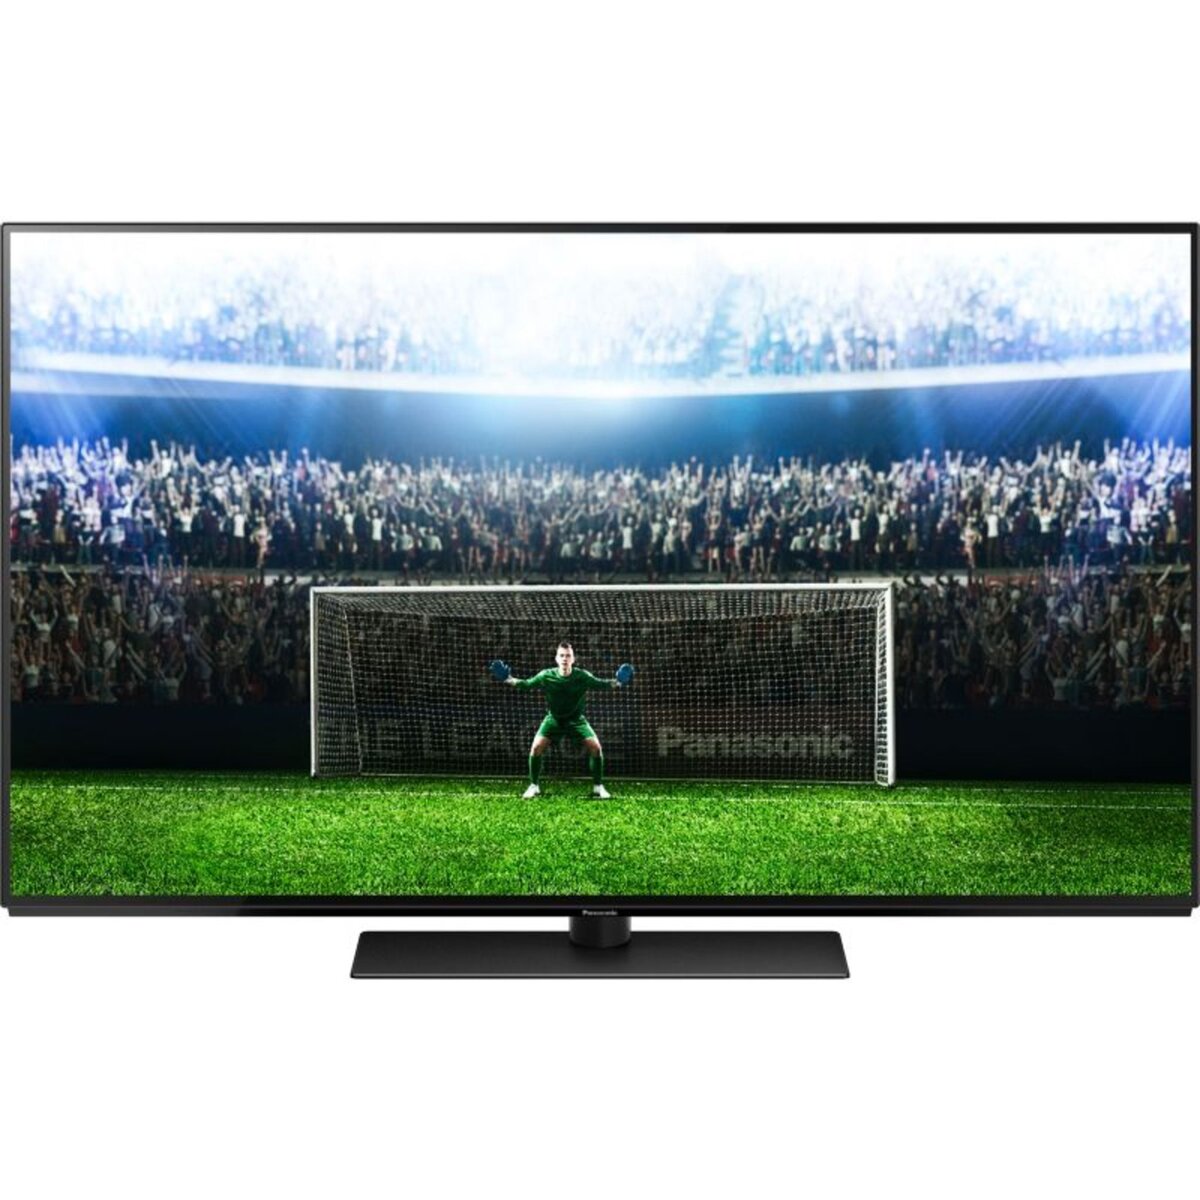 PANASONIC 55FZ800 TV OLED 4K UHD 139 cm HDR Smart TV